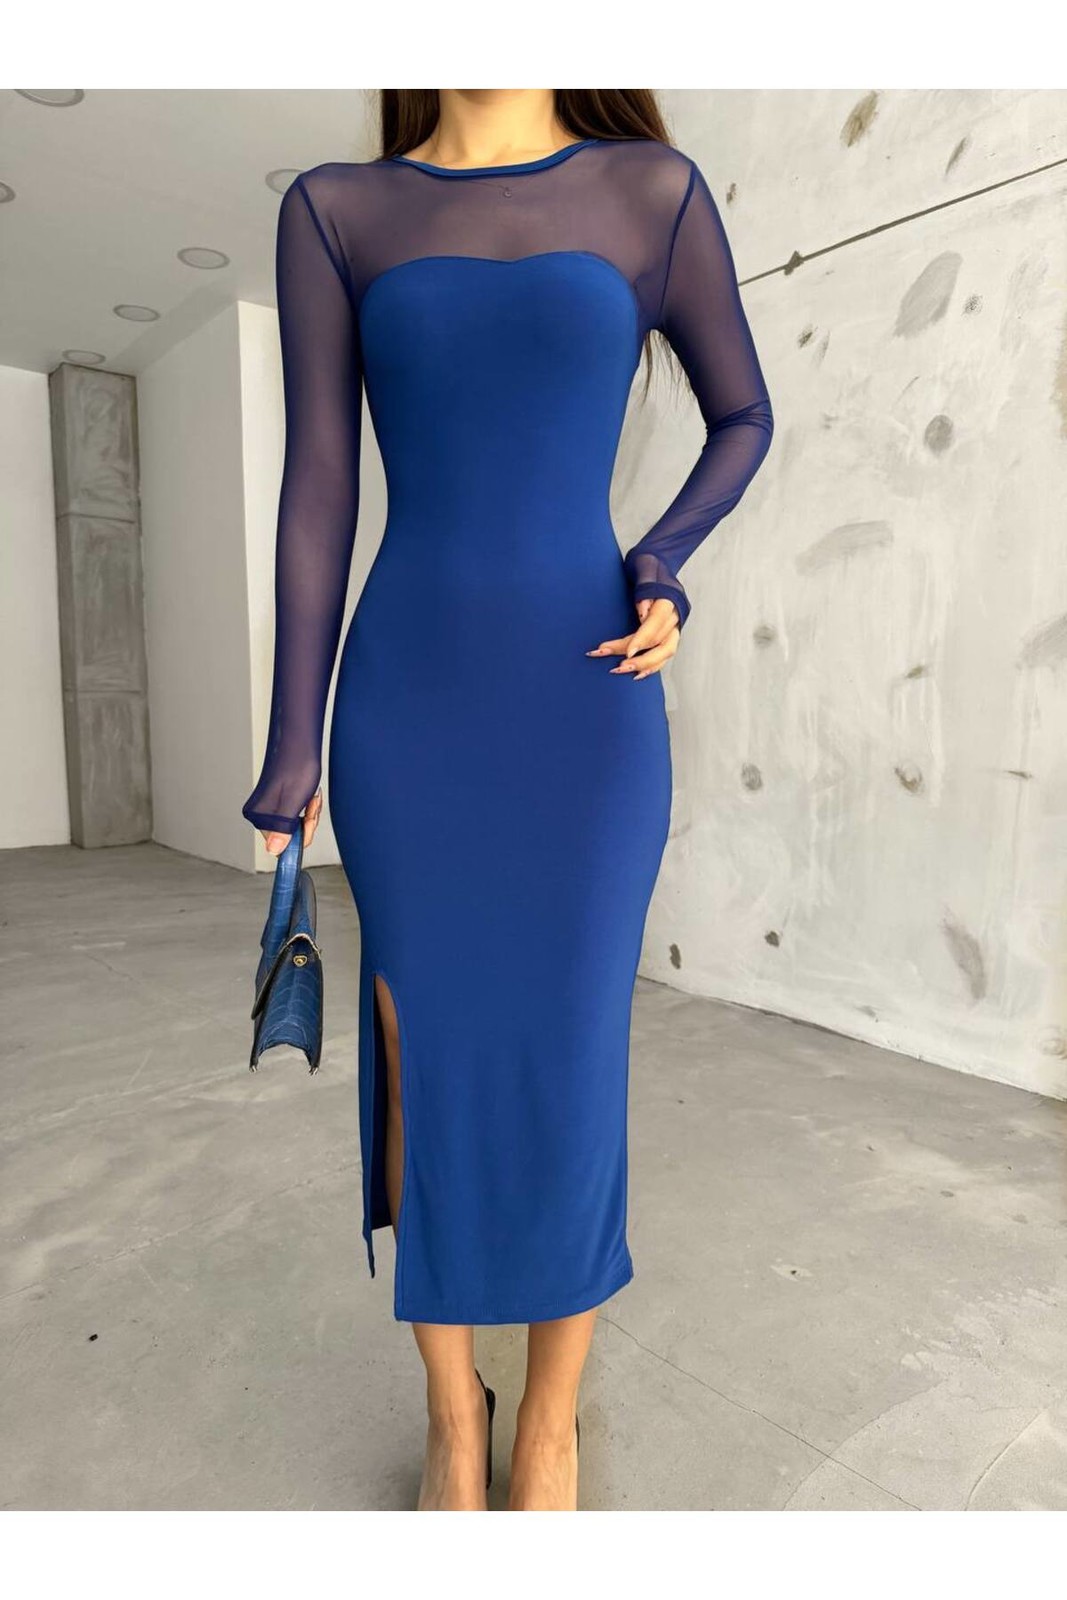 BİKELİFE Women's Blue Slit Detailed Lycra Pencil Dress